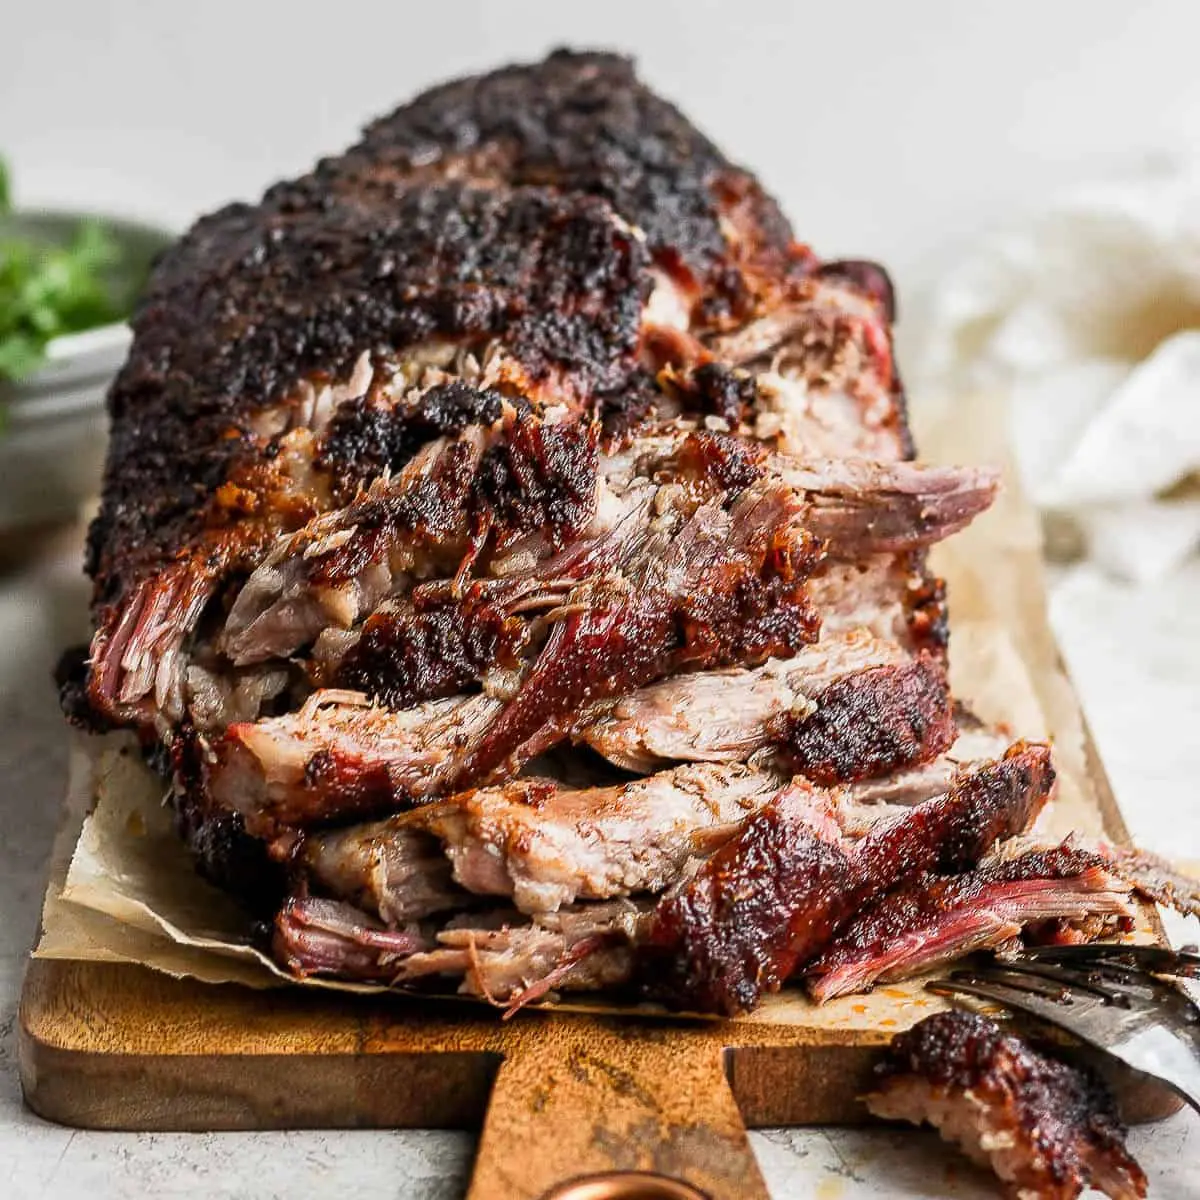 smoked pork shoulder cook time per pound - How long do you cook a 11 pound pork shoulder